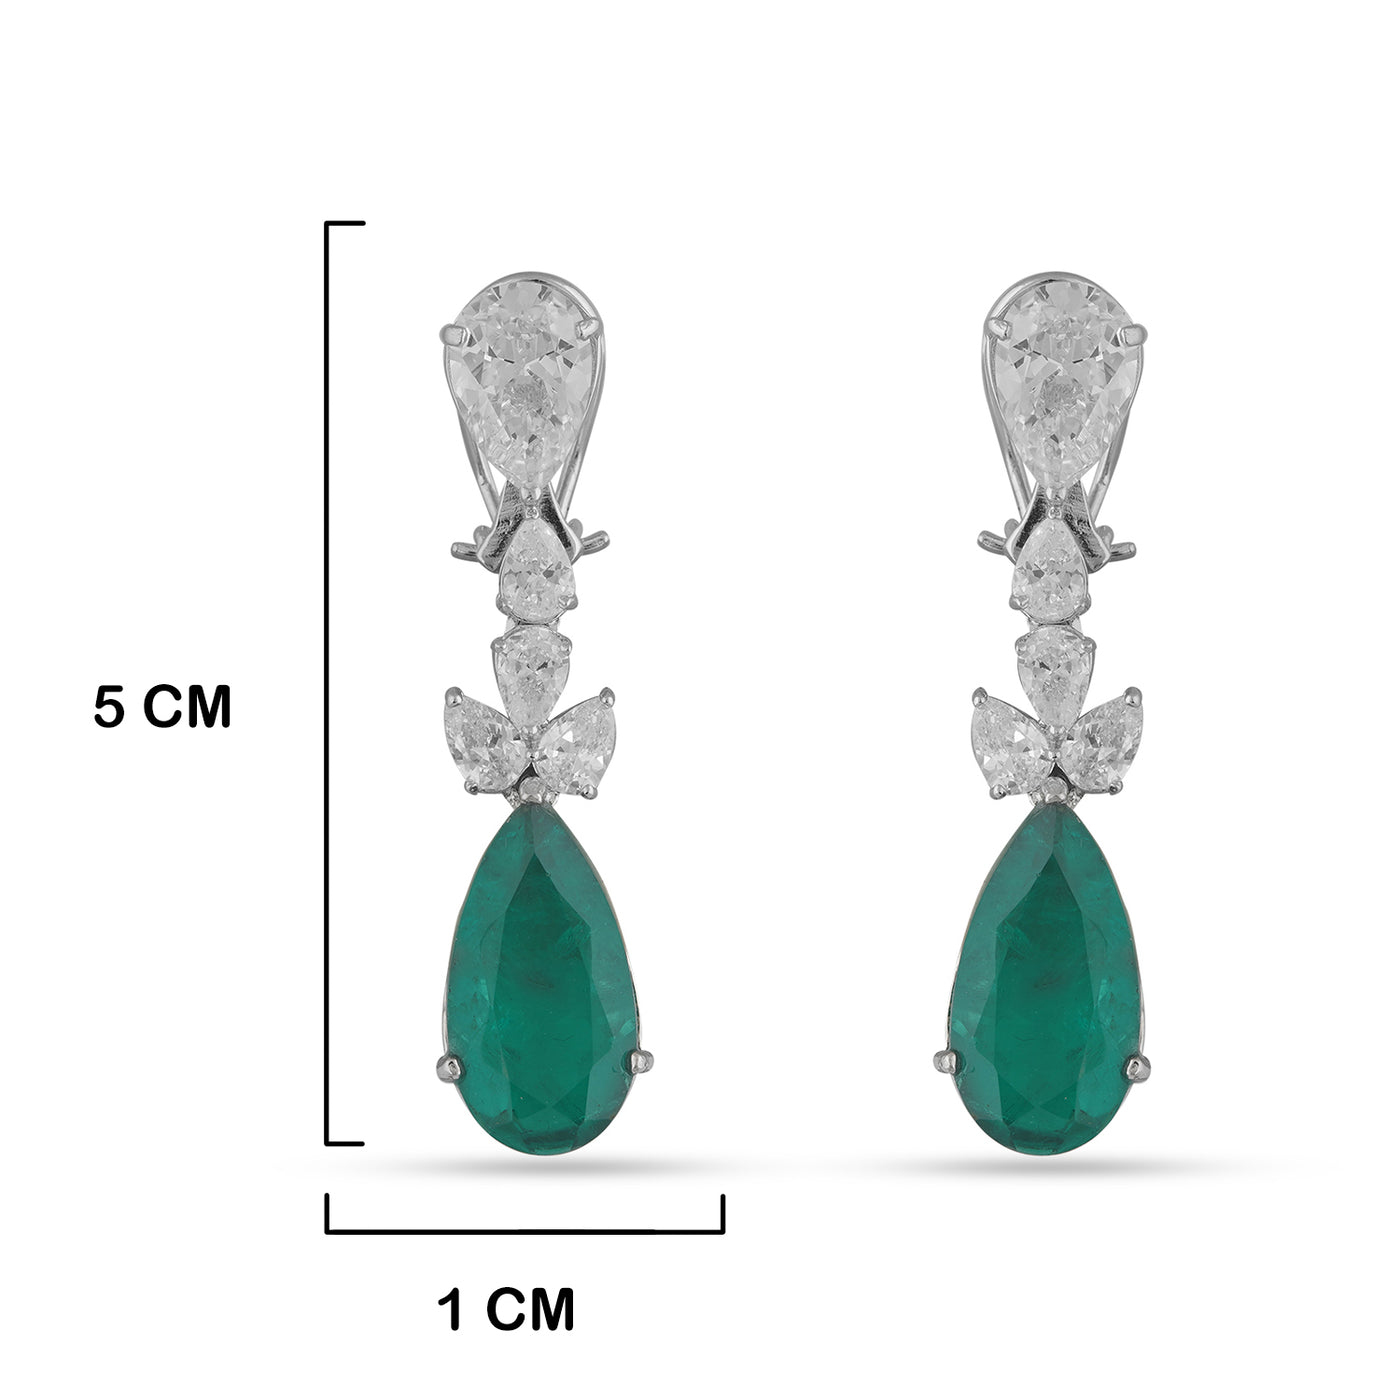 Emerald Green Drop CZ Earrings with Measurements in cm